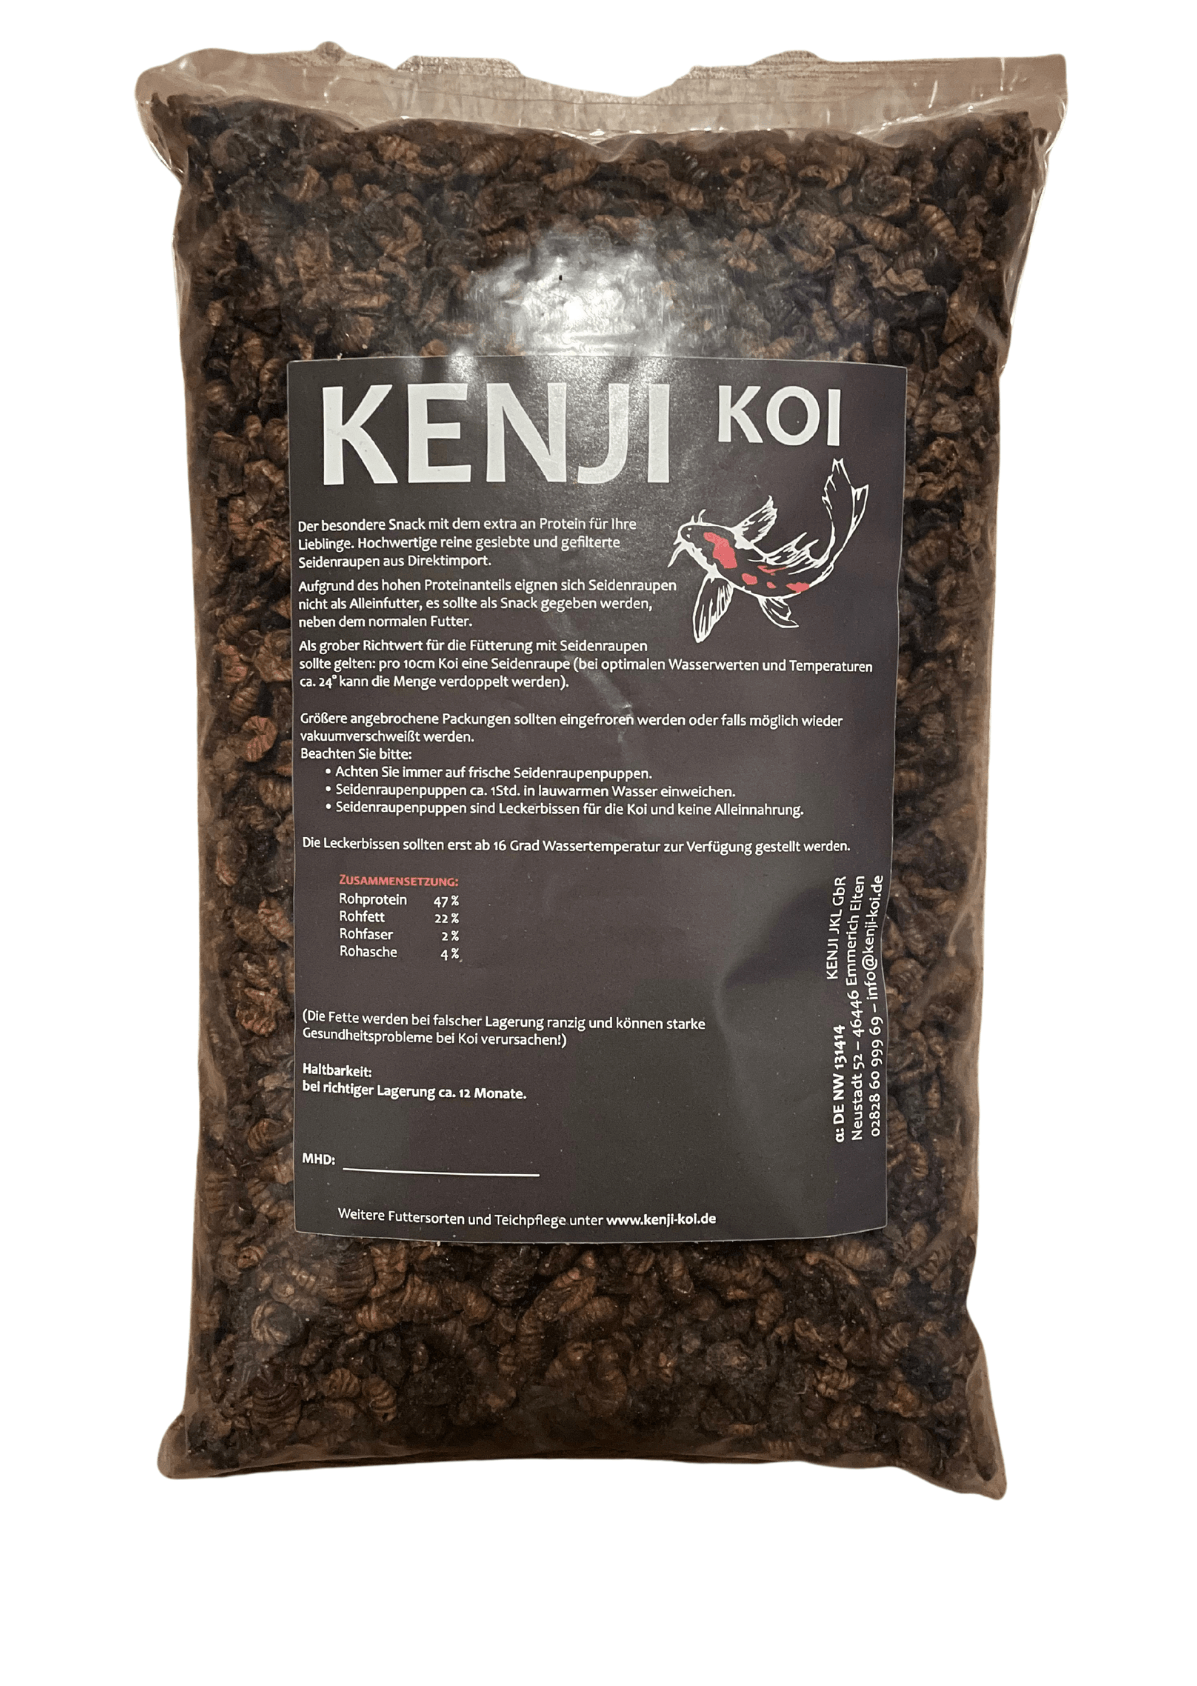 KENJI KOI Snack - Seidenraupen - KENJI KOI Products